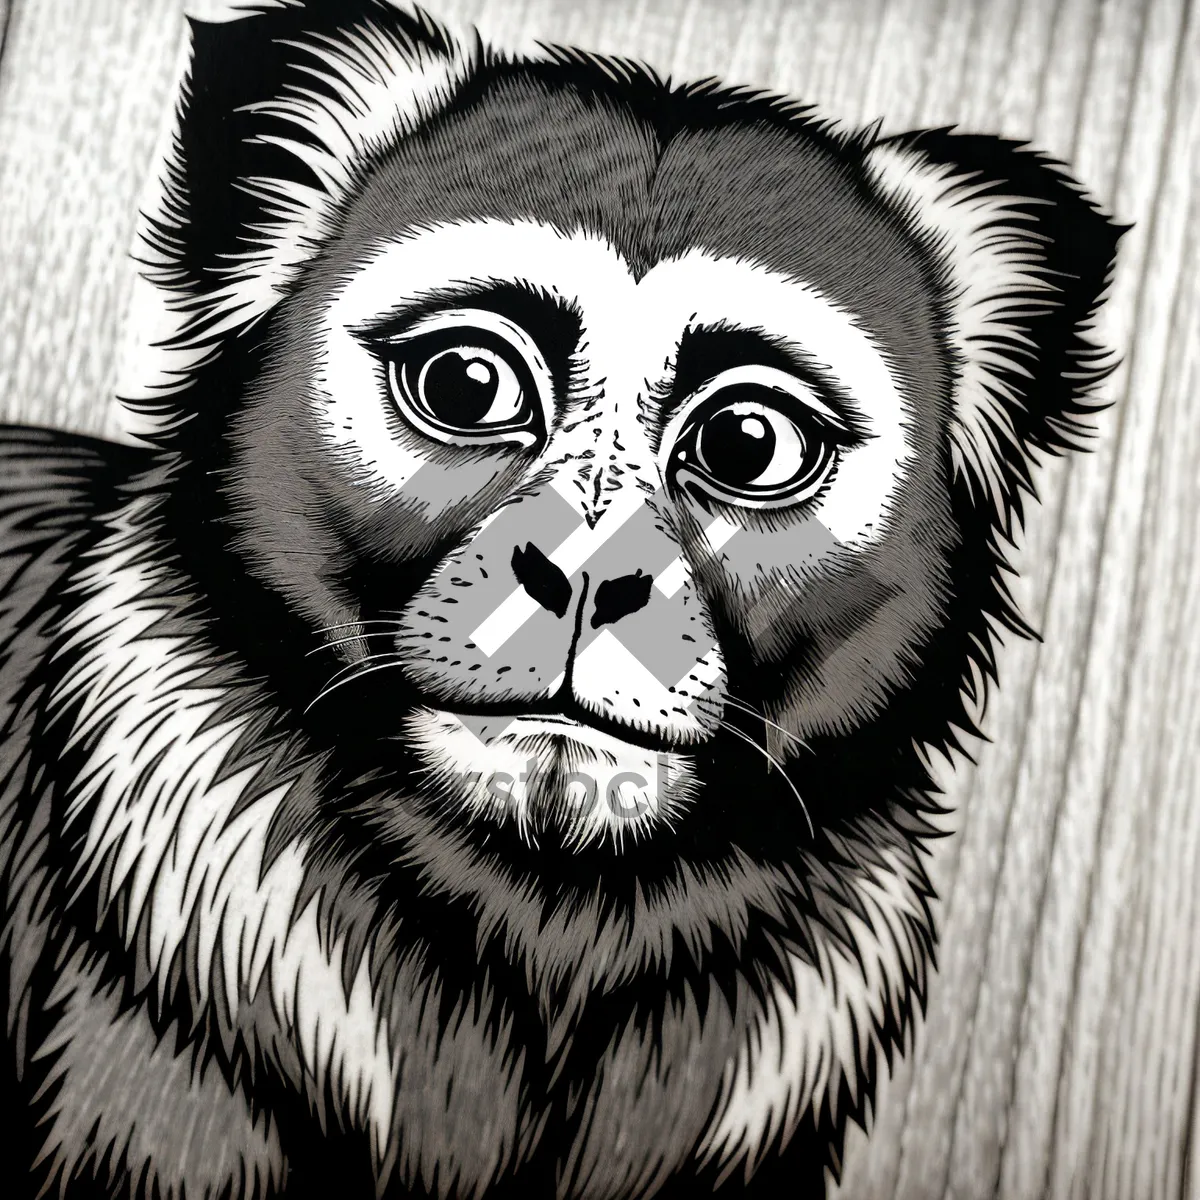 Picture of Gibbon Wild Ape - Primate Monkey Face